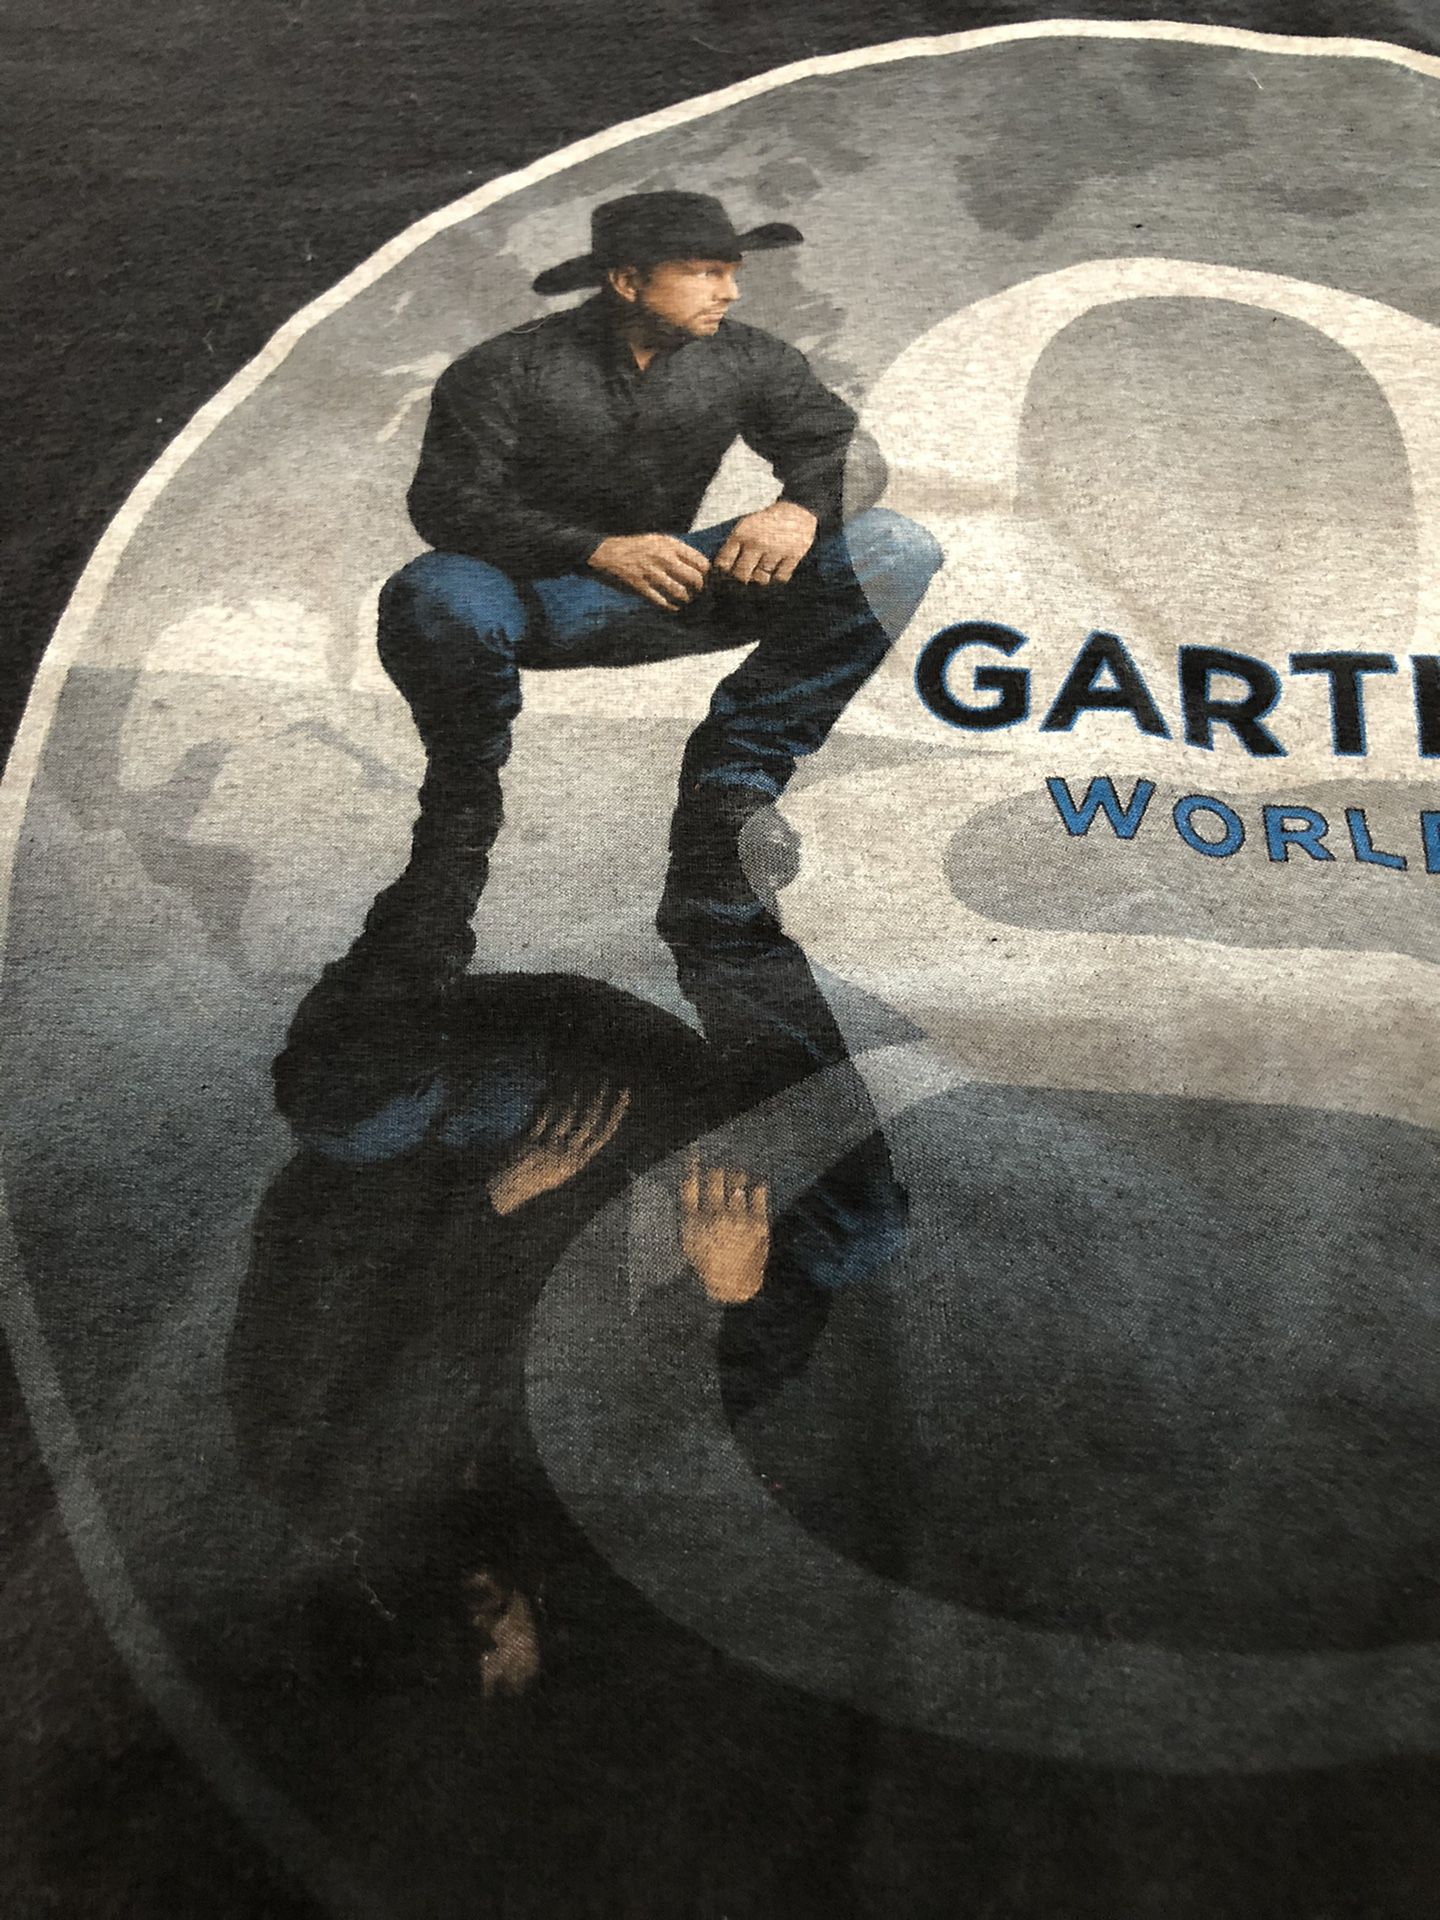 Garth brooks world tour T-shirt 2014 and 15. Size 2X